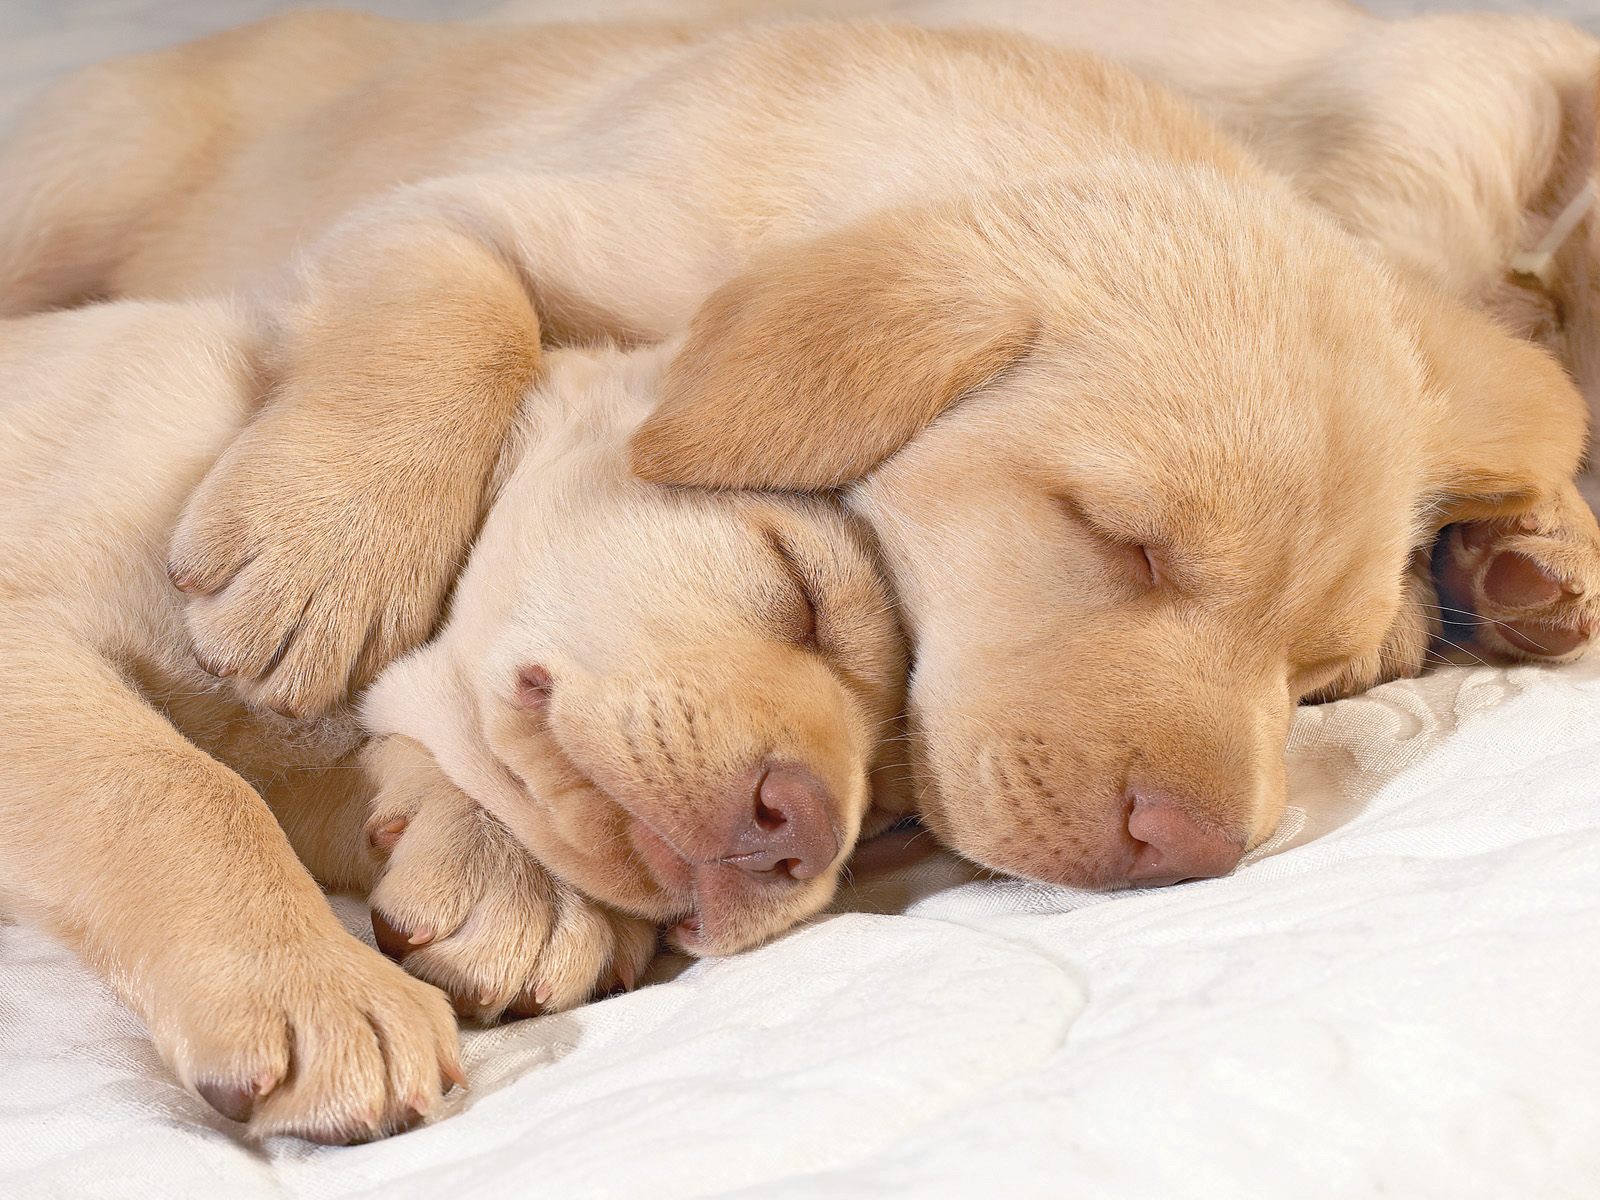 Sleeping Puppies HQ Desktop Wallpaper 